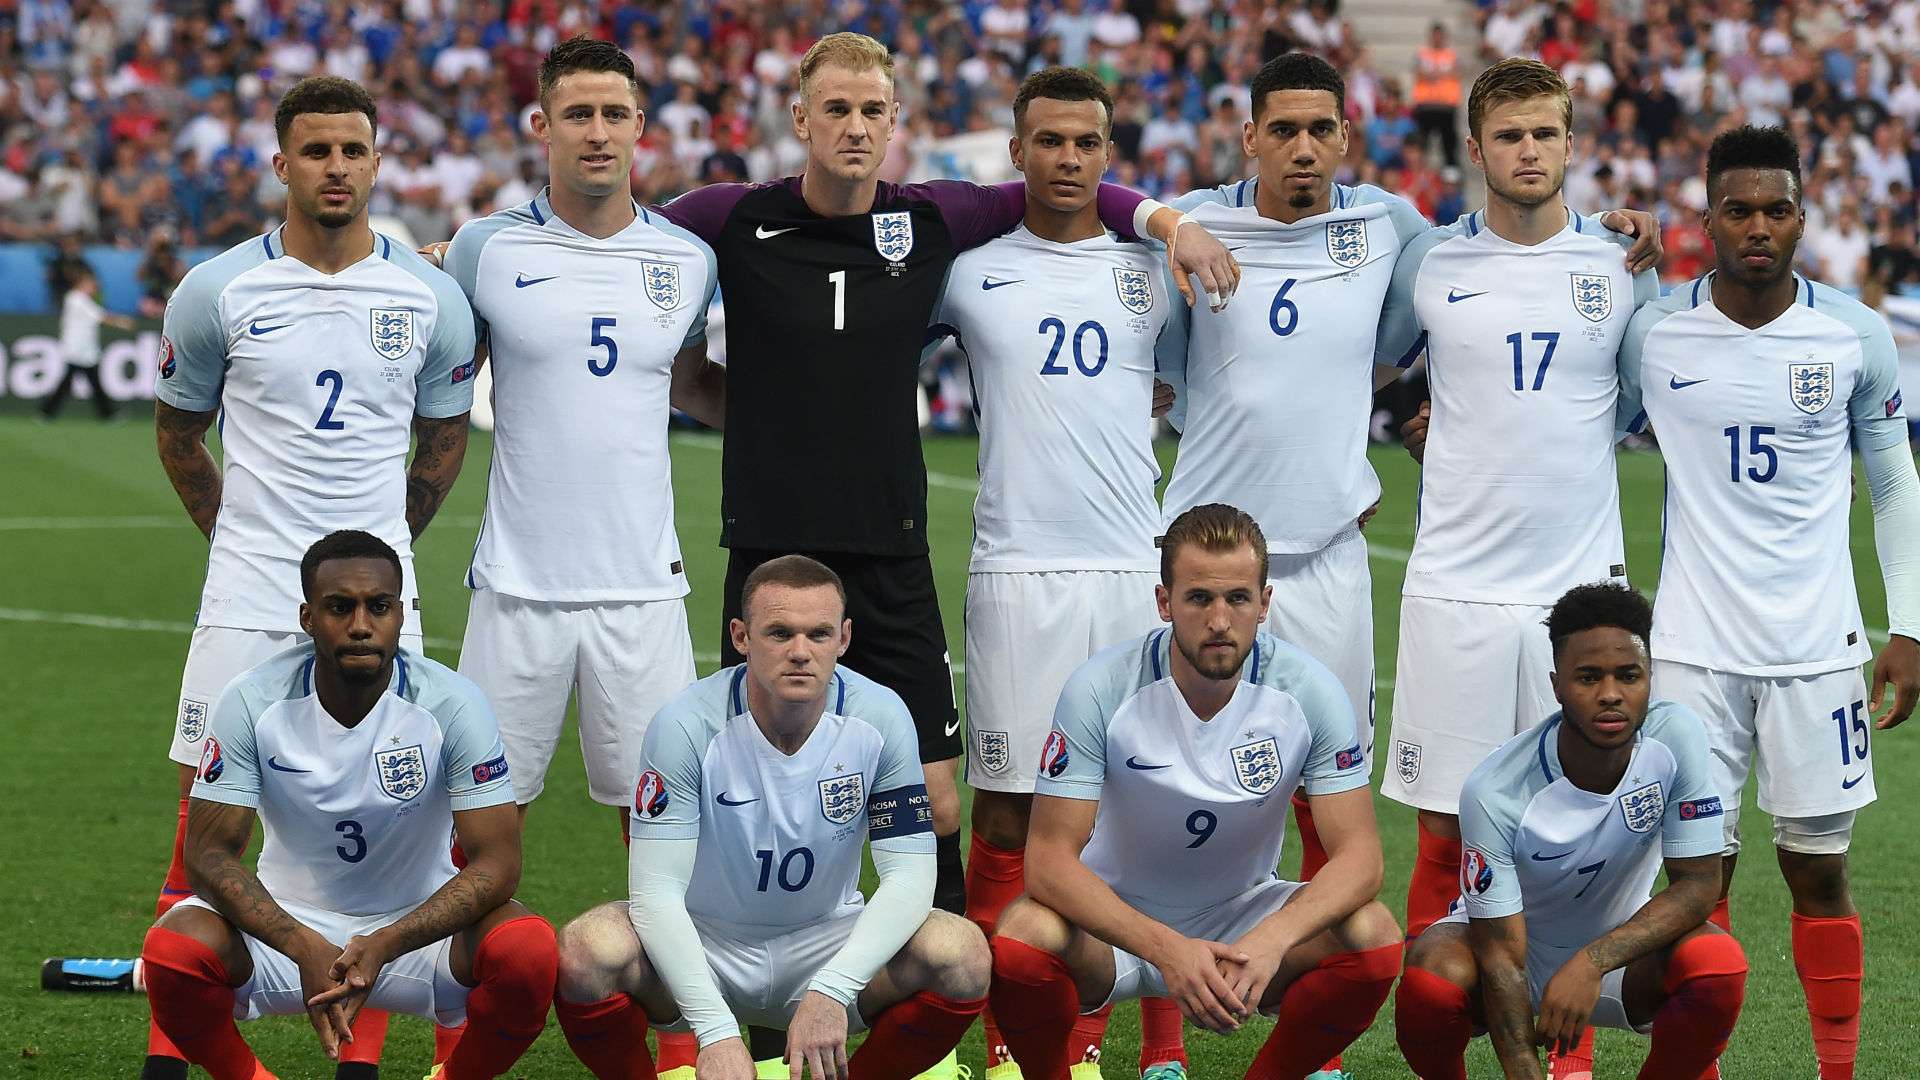 England team photo